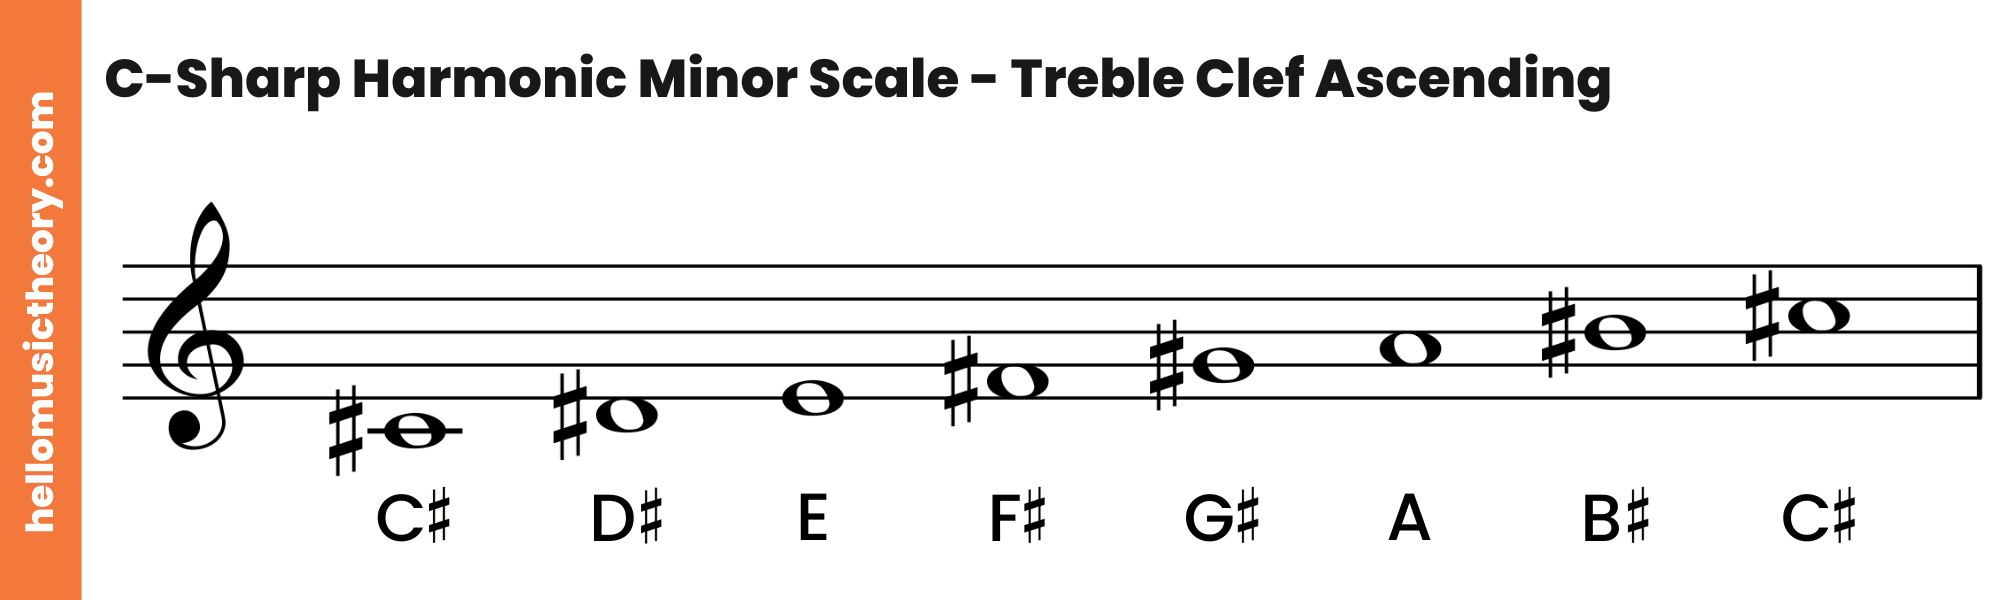 C-Sharp Harmonic Minor Scale Treble Clef Ascending